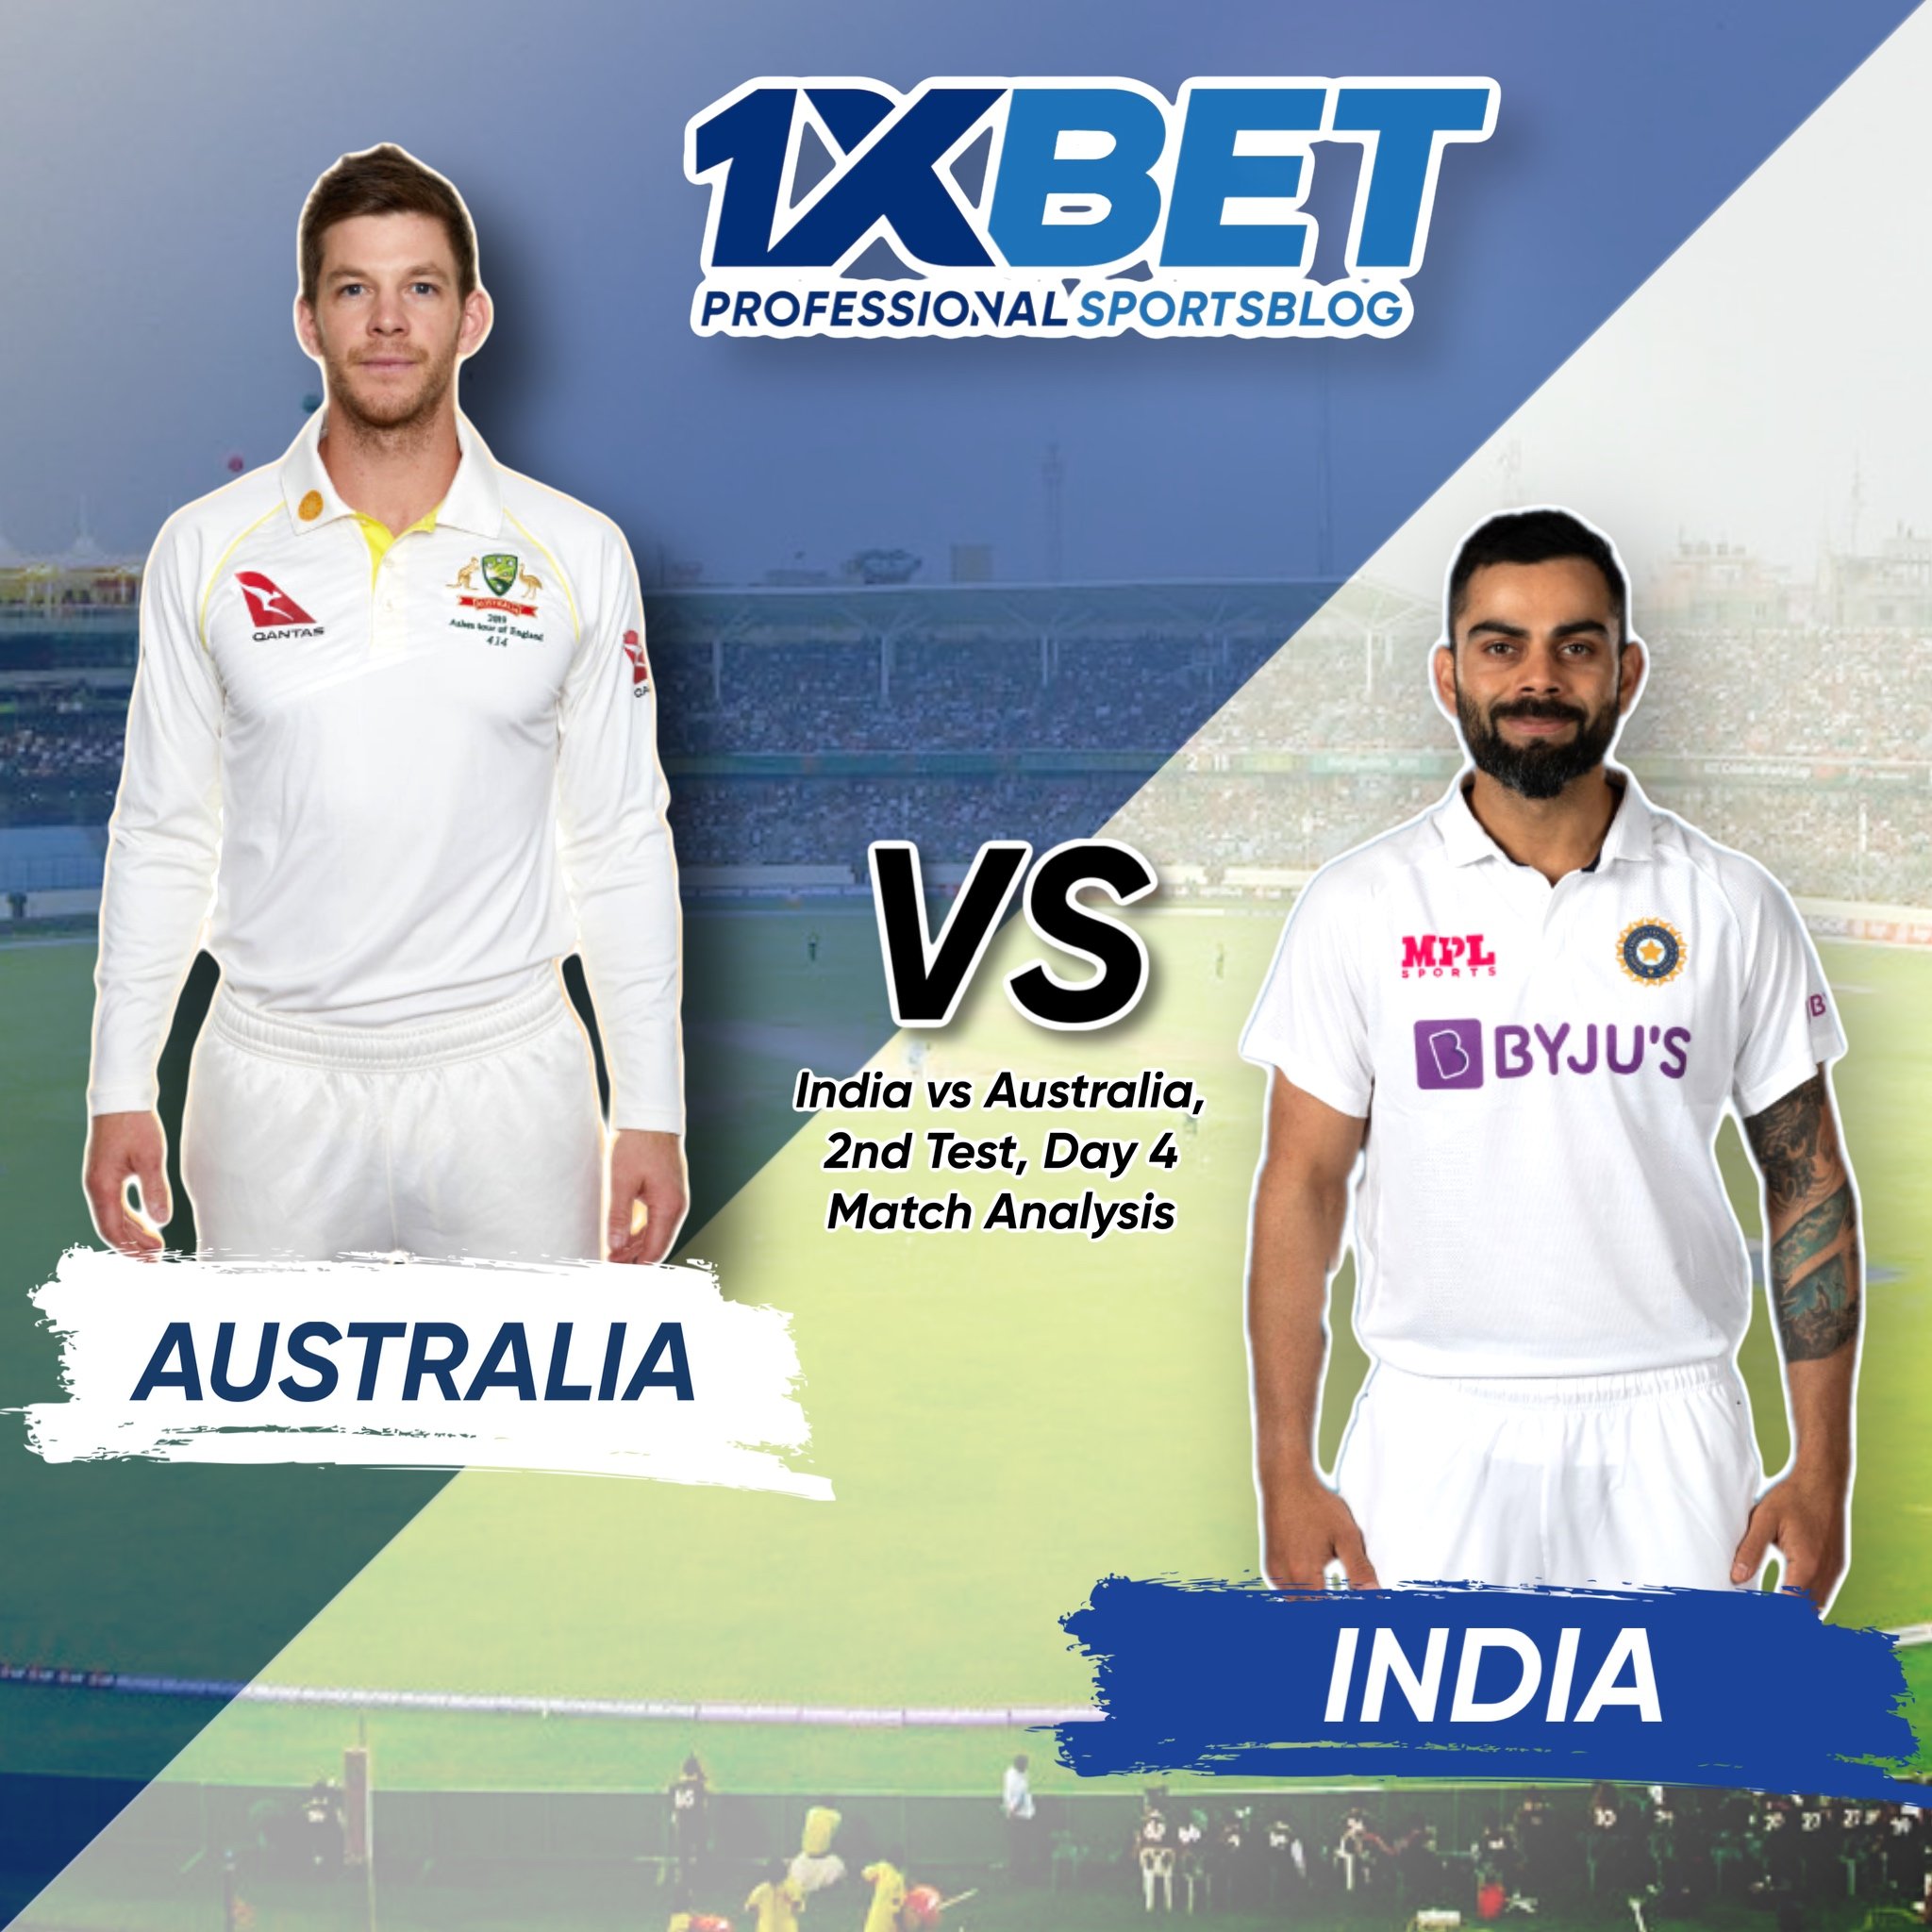 India vs Australia, 2nd Test, Day 4 Match Analysis